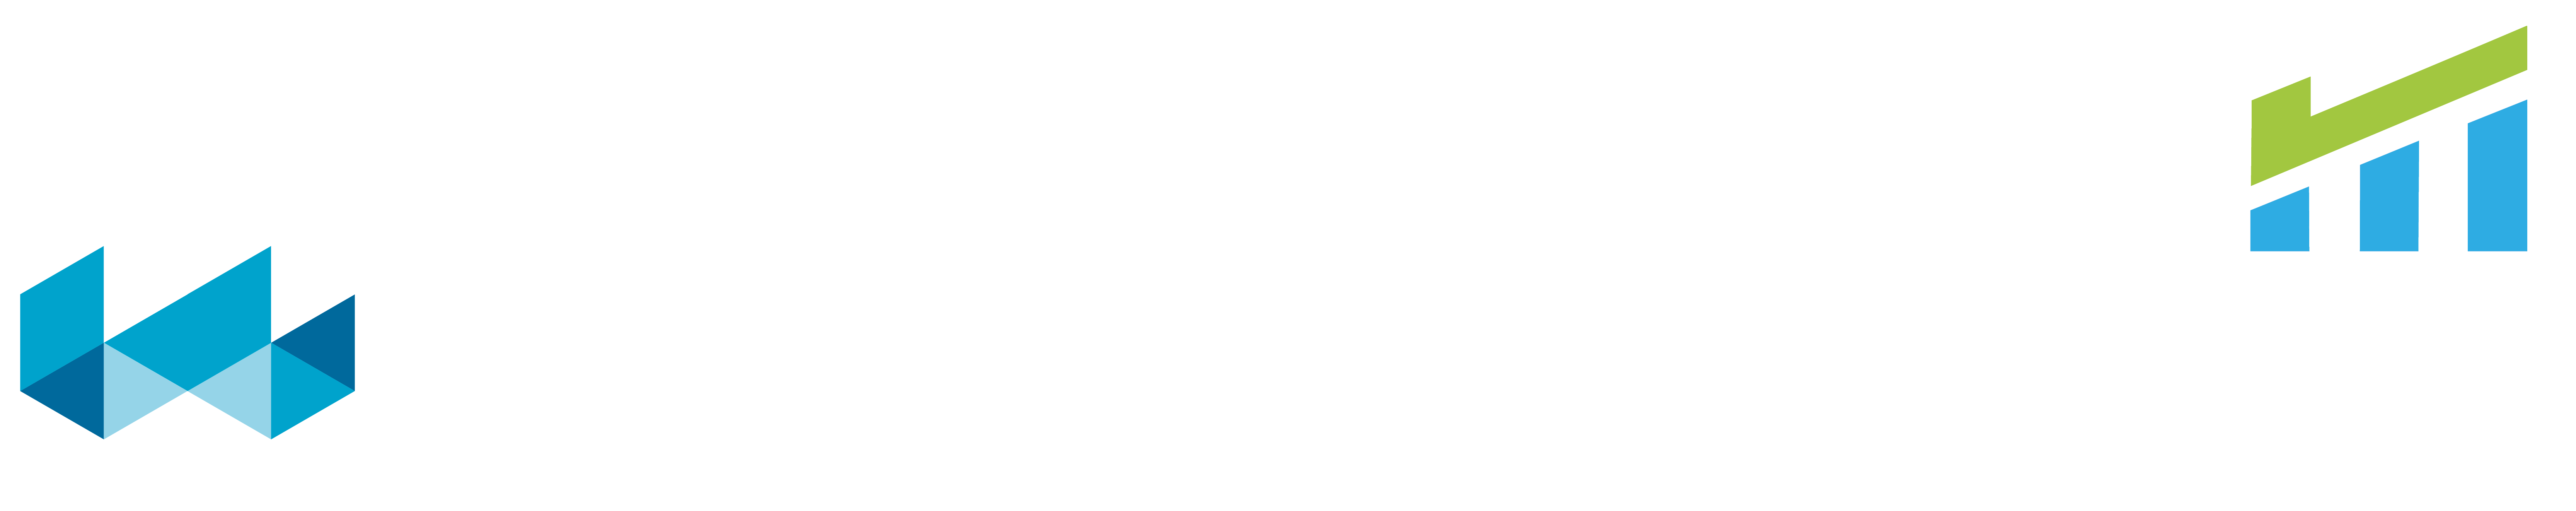 Mercer-Mettl_Core logo_Reverse.png